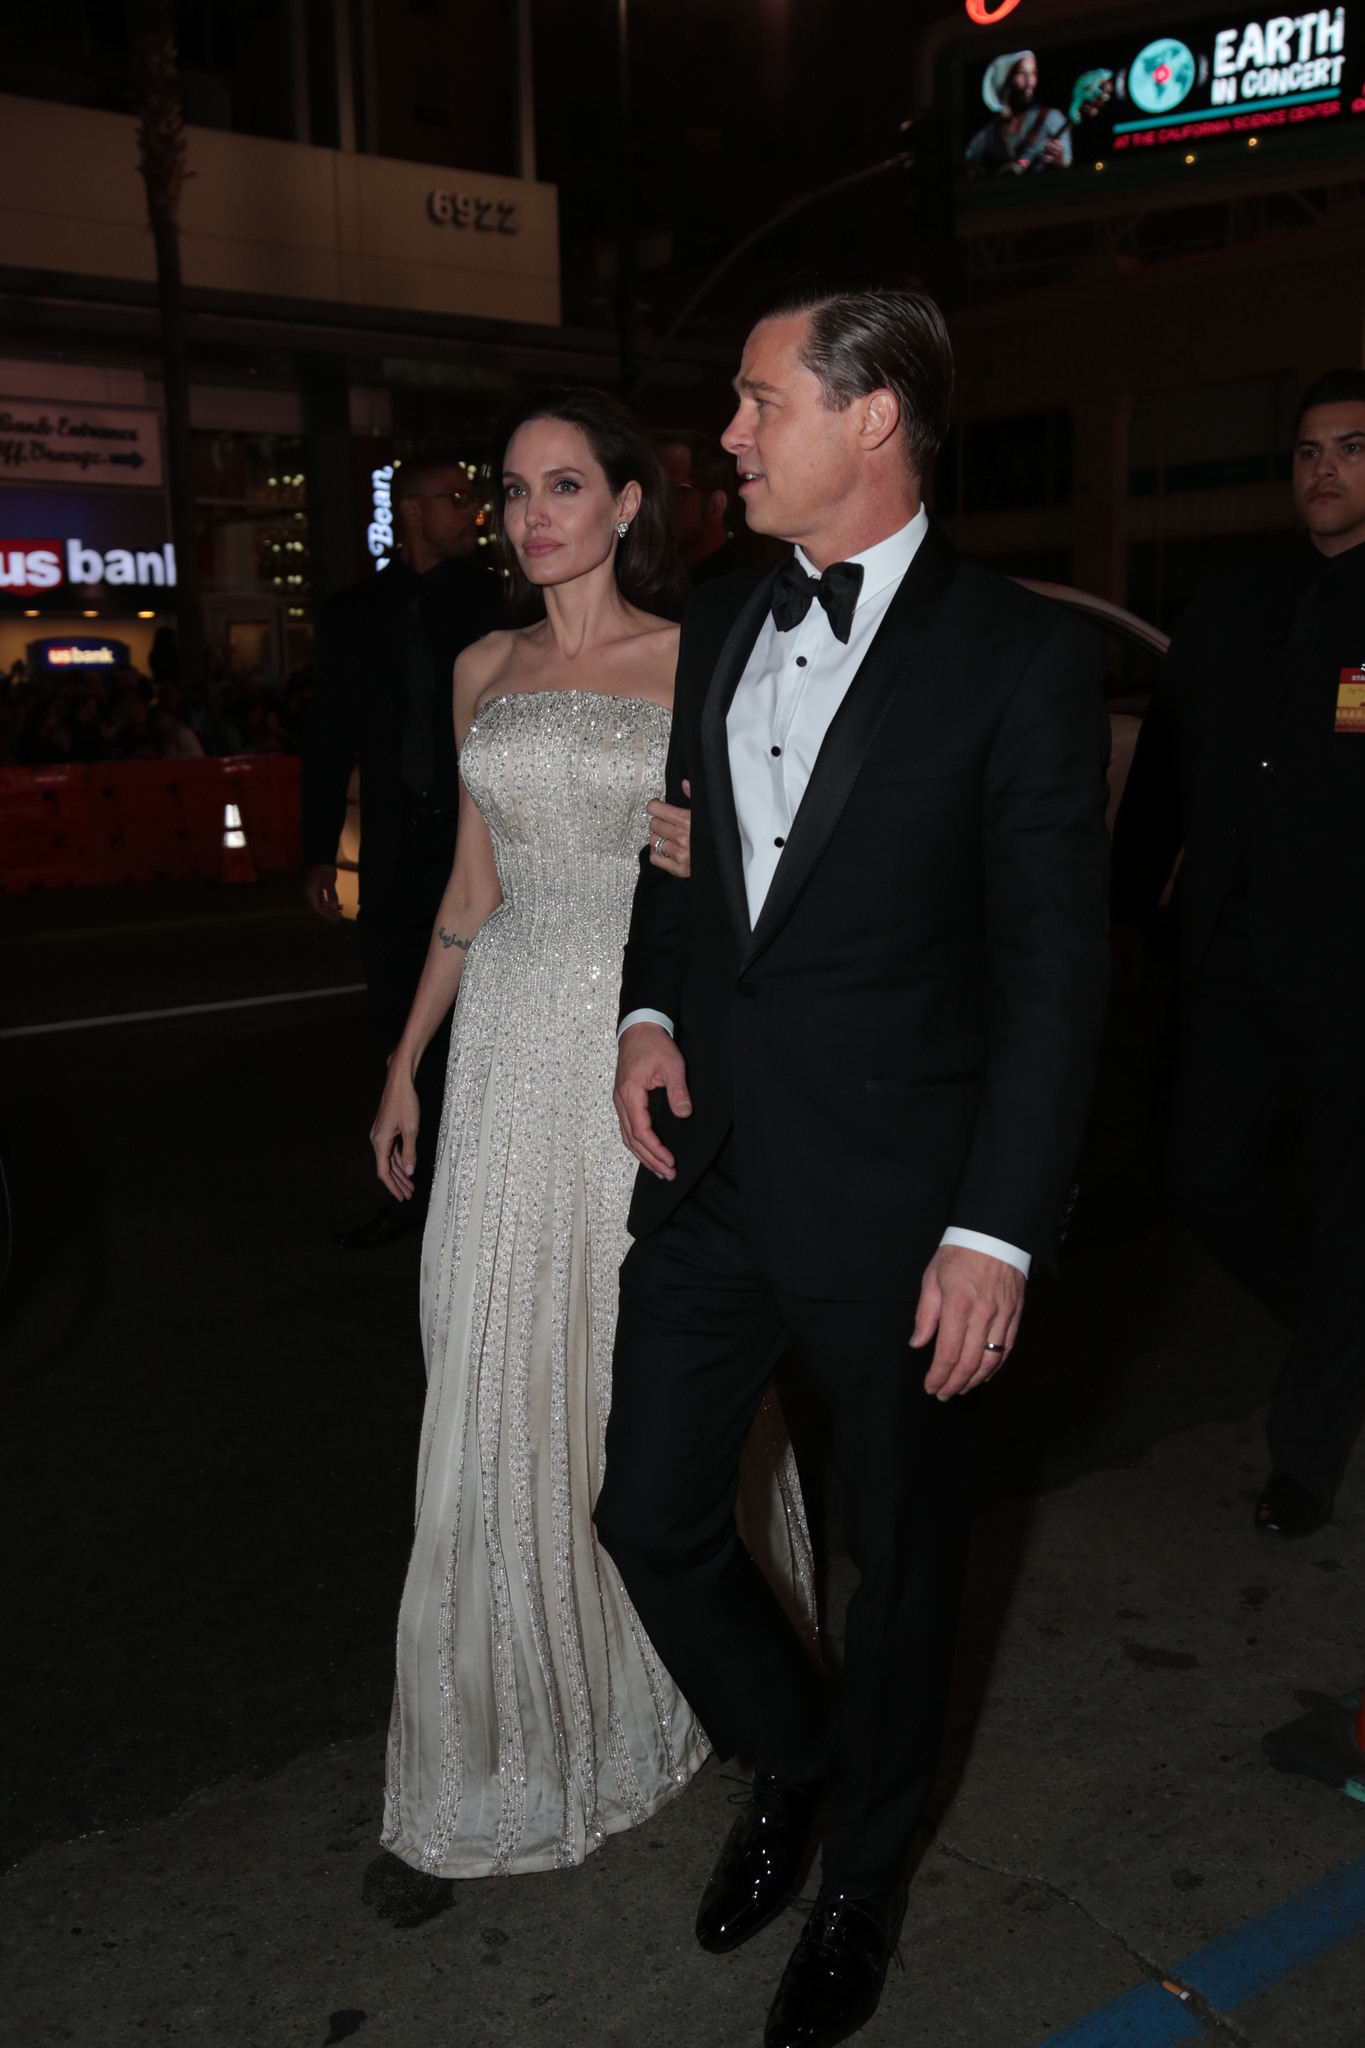 Brad Pitt and Angelina Jolie at event of Prie juros (2015)